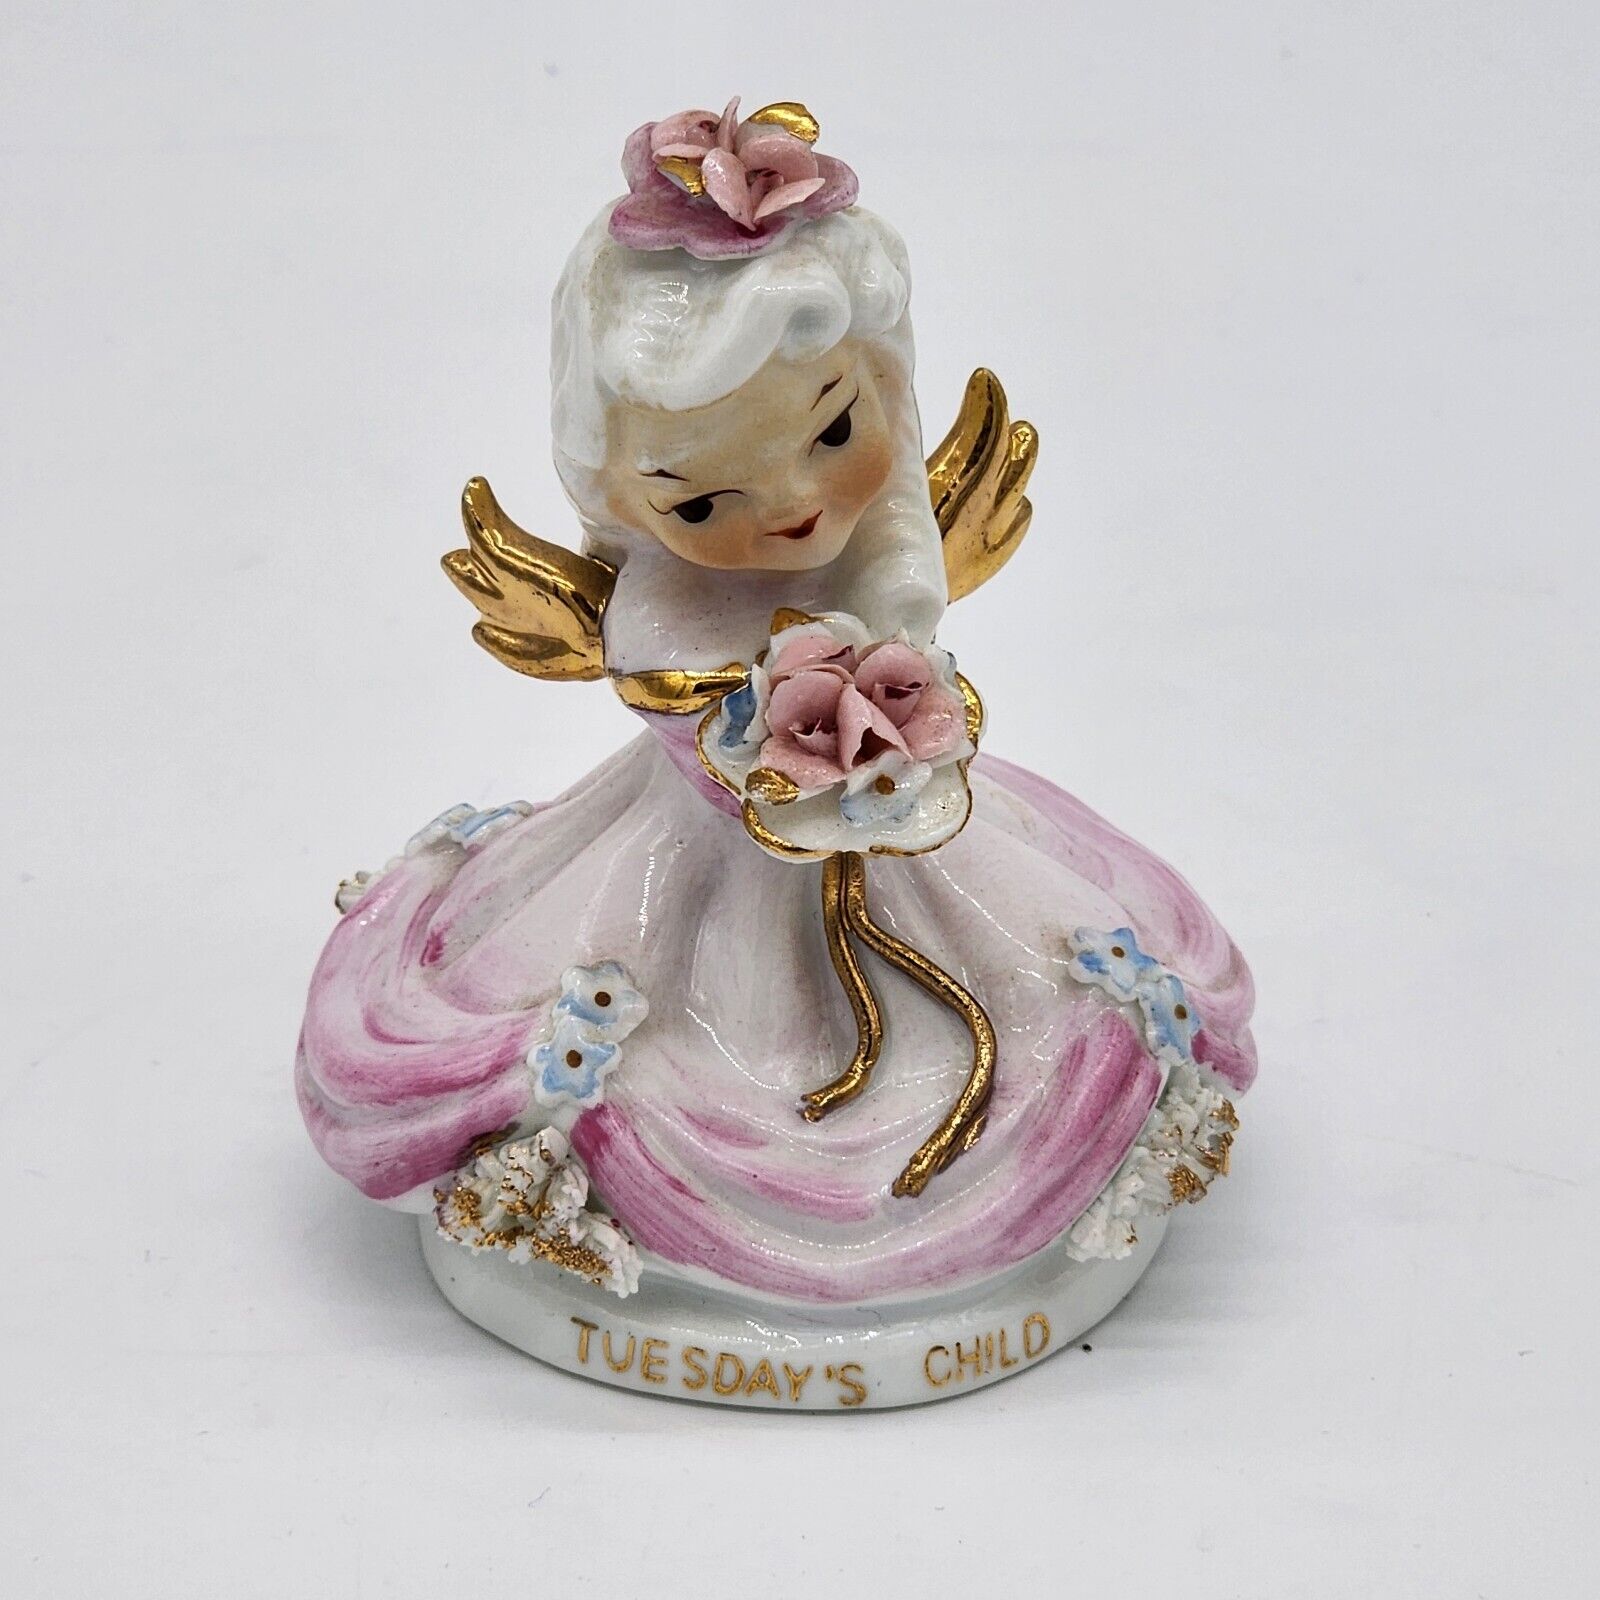 Vintage 1950s Lefton Tuesday's Child Angel Figurine K8281